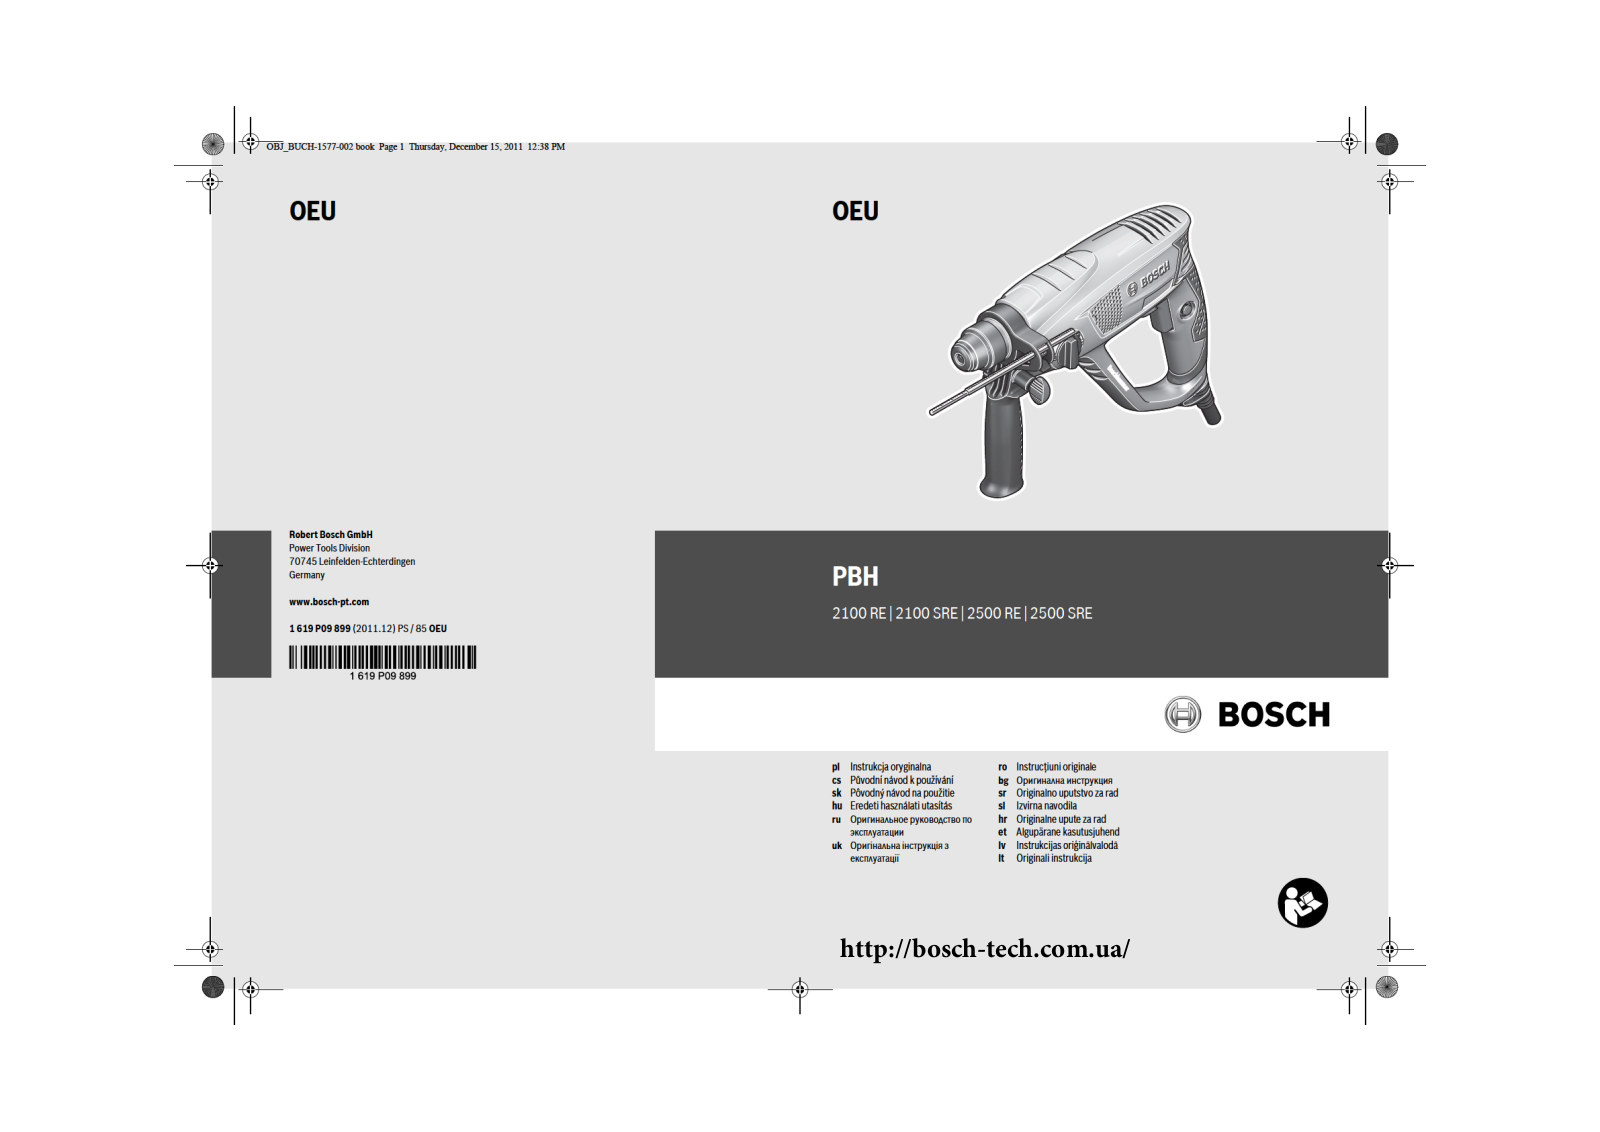 Bosch PBH 2100 User Manual